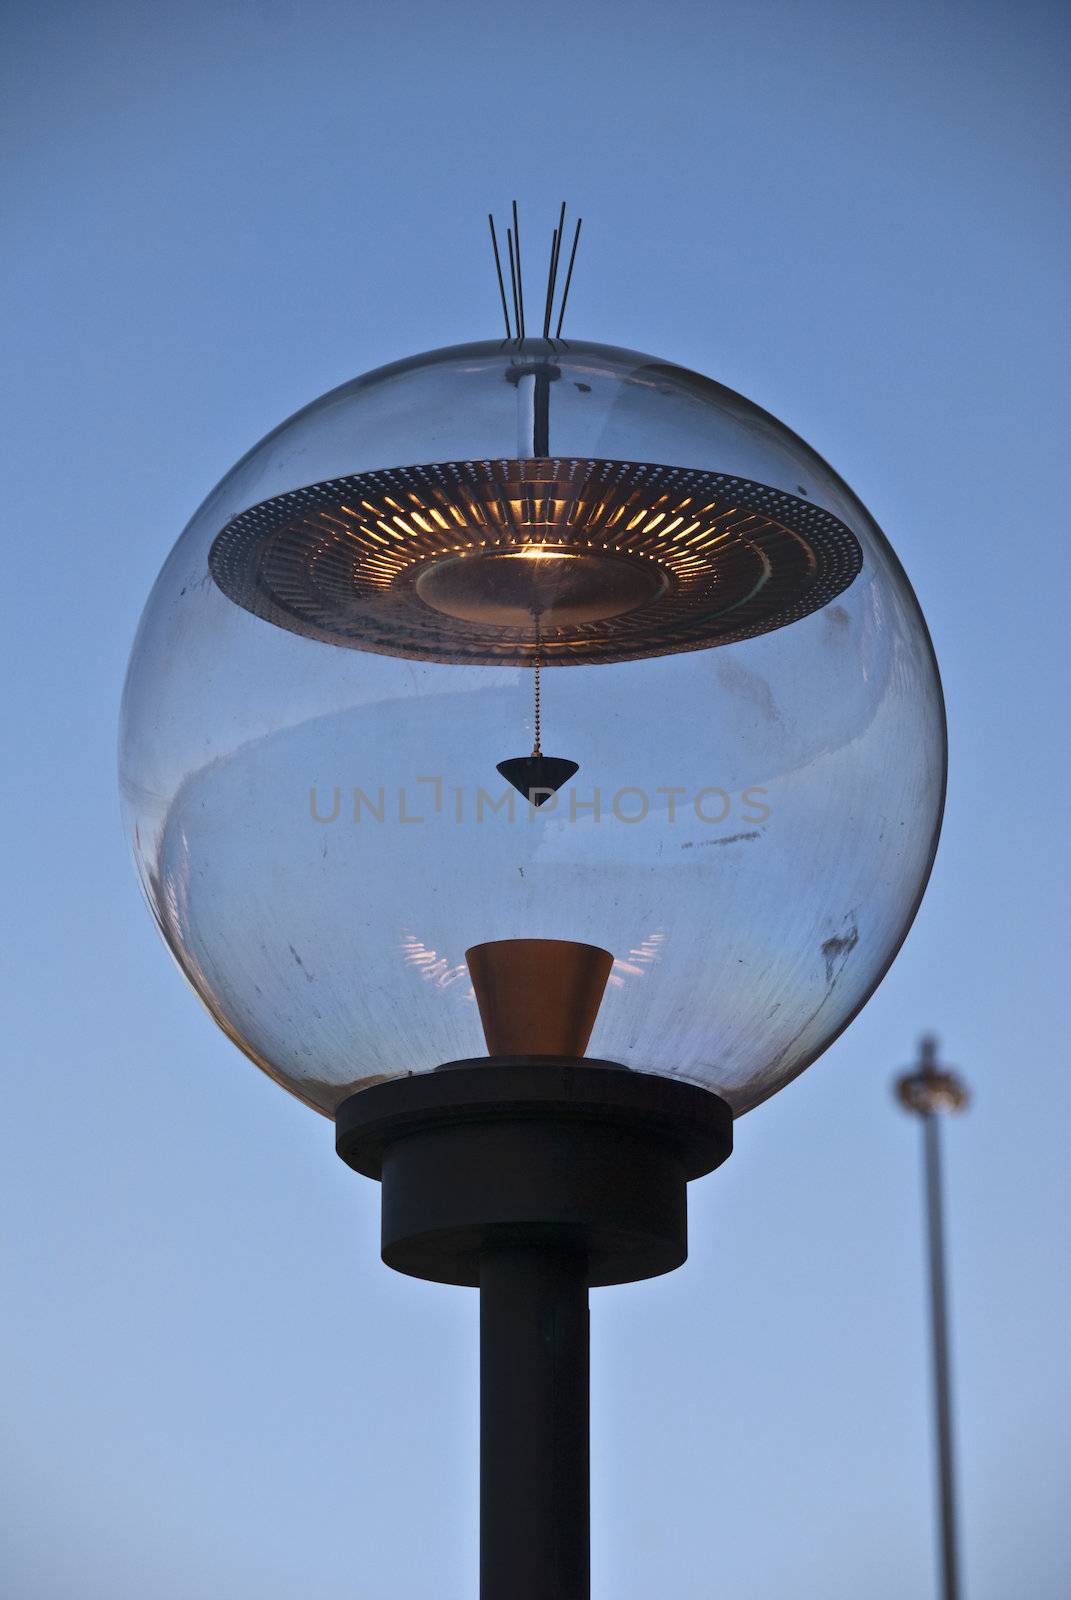 Lamp Post in Sydney, Australia by jovannig